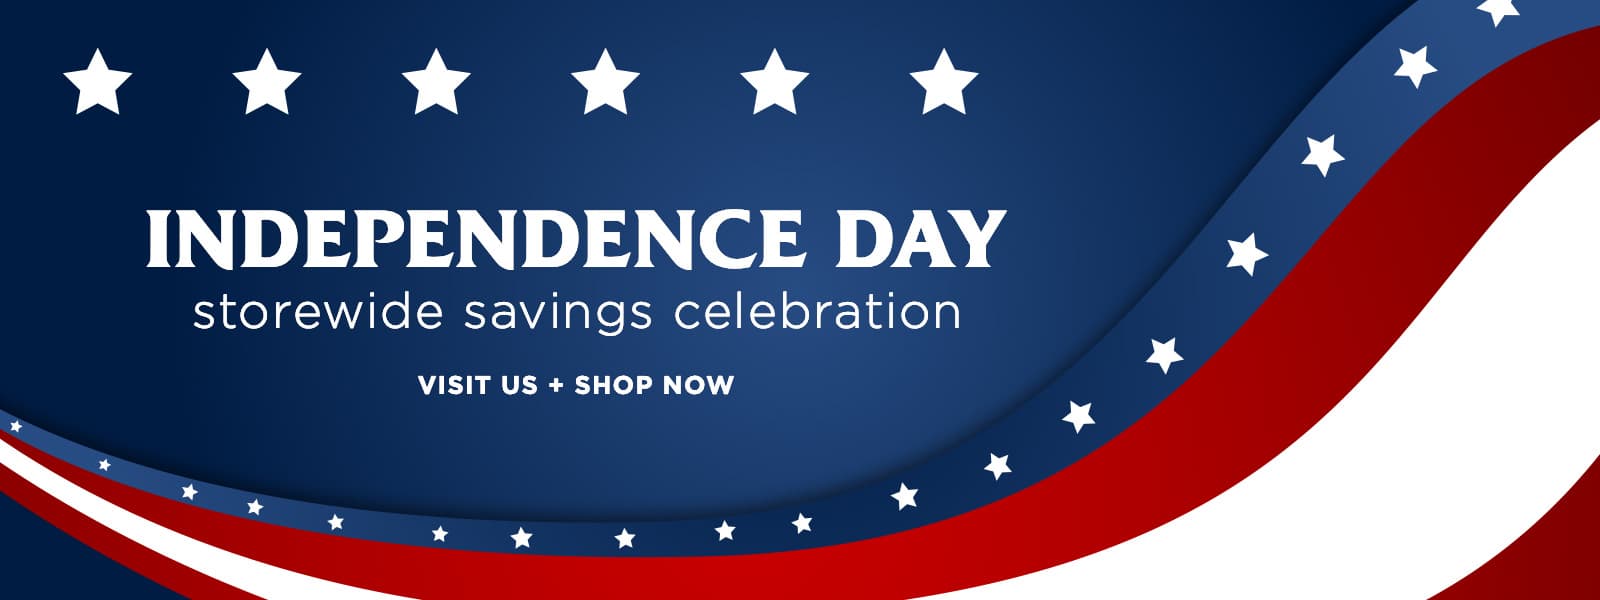 Independence Day Storewide Savings Celebration